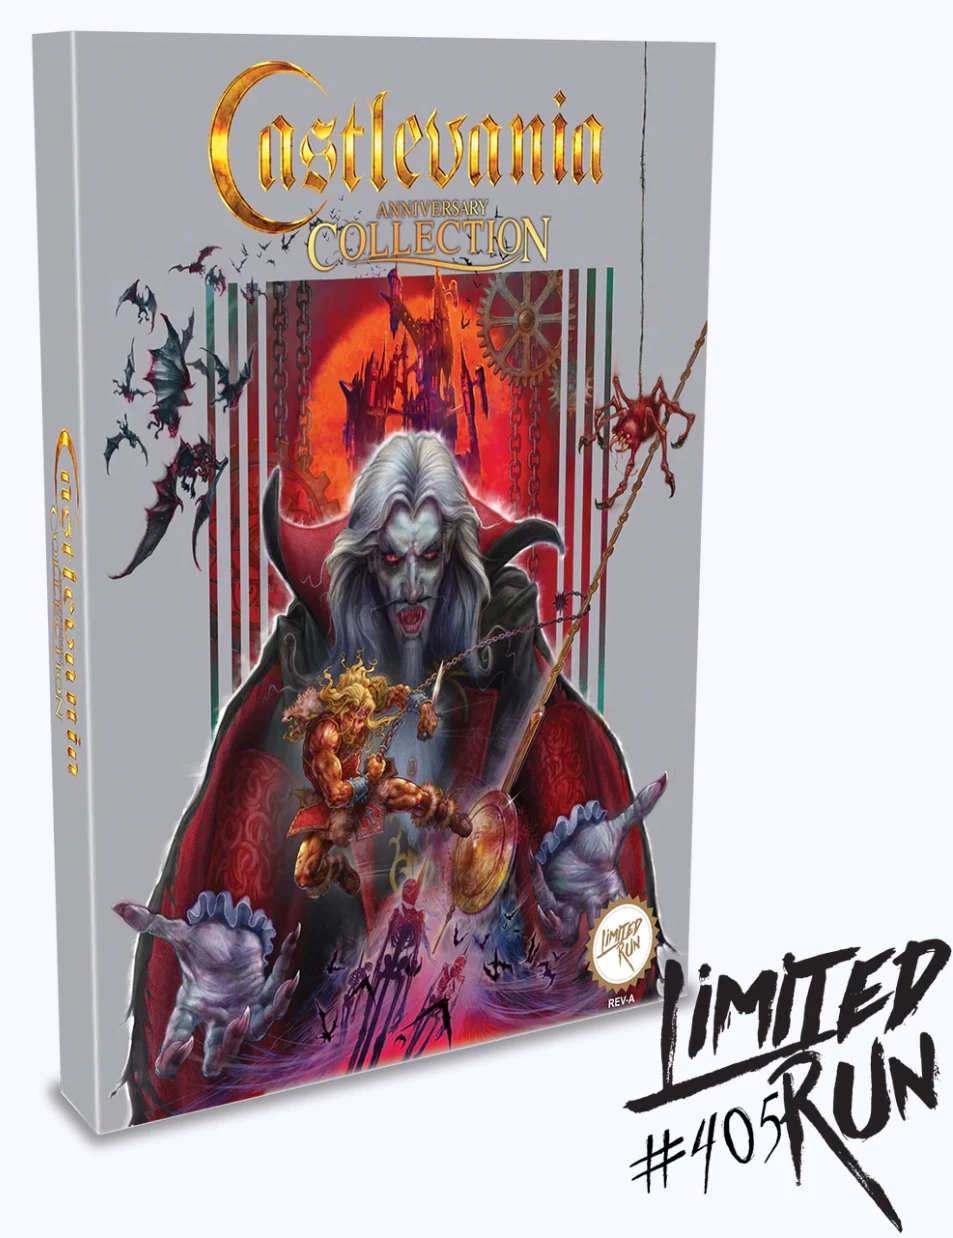 Castlevania - Anniversary Collection - Classic Edition (Limited Run) (PS4), Konami